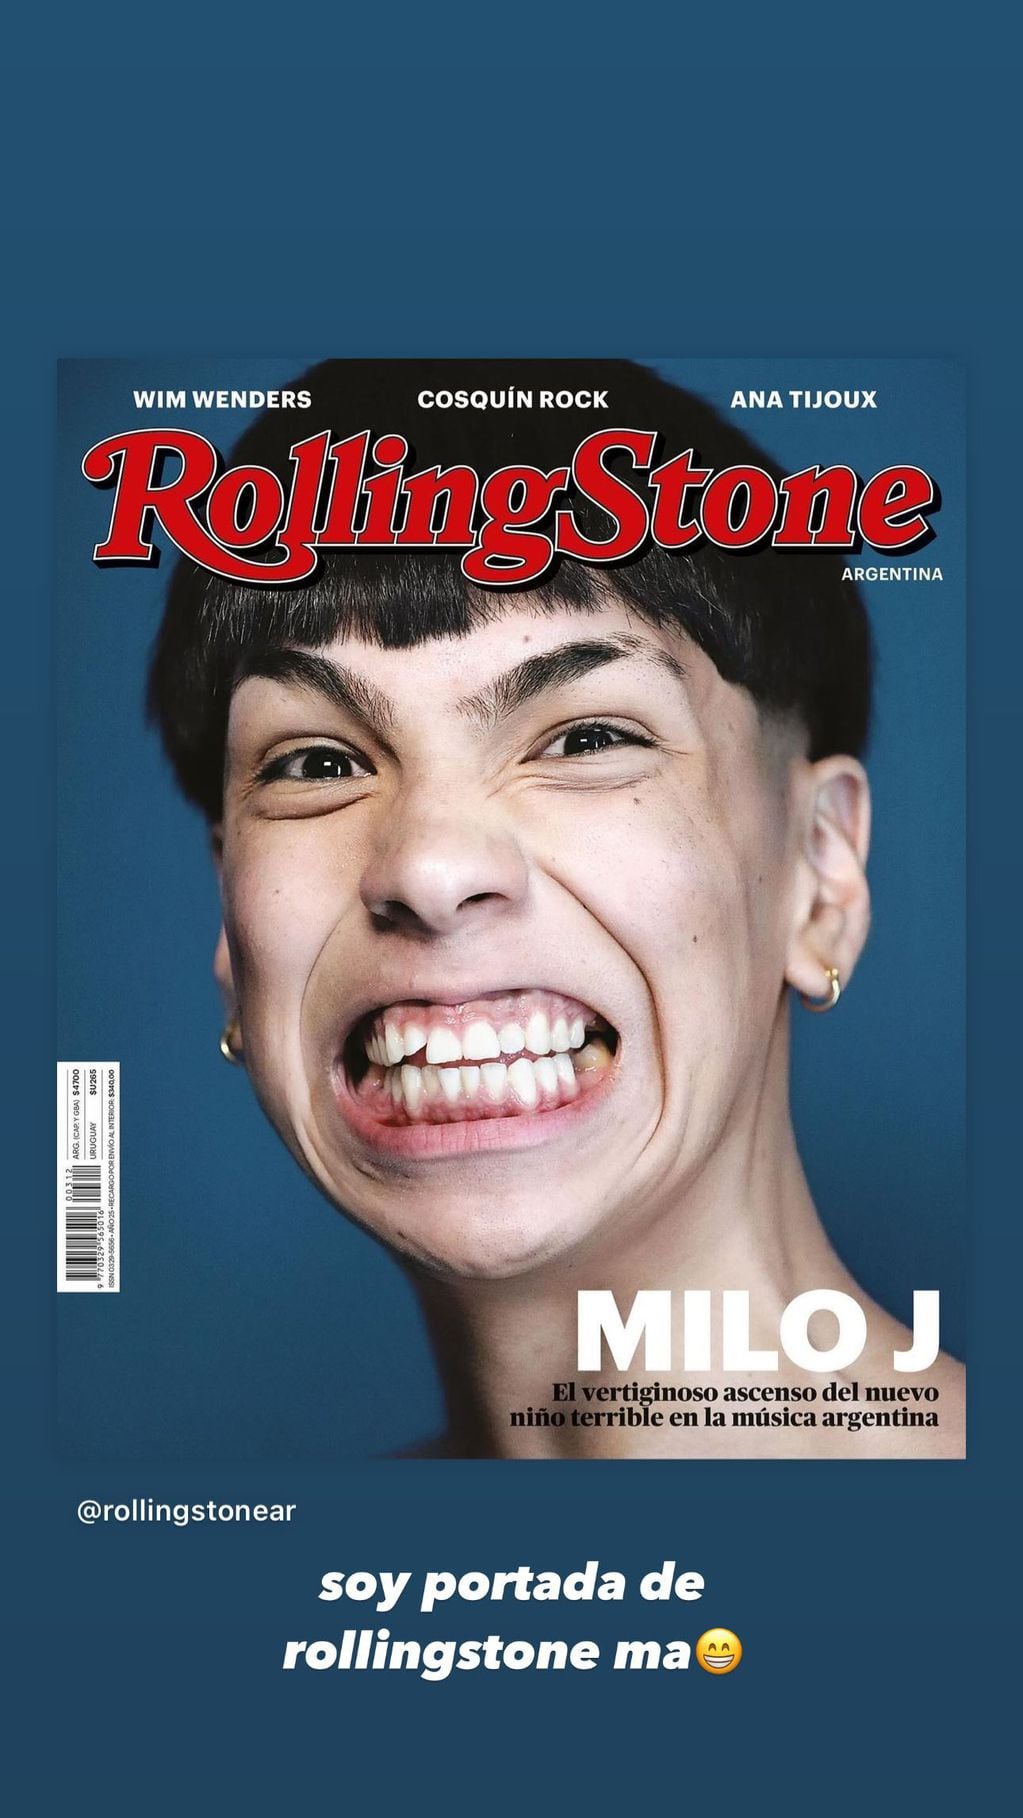 Milo J es la cara de la portada de Rolling Stone.